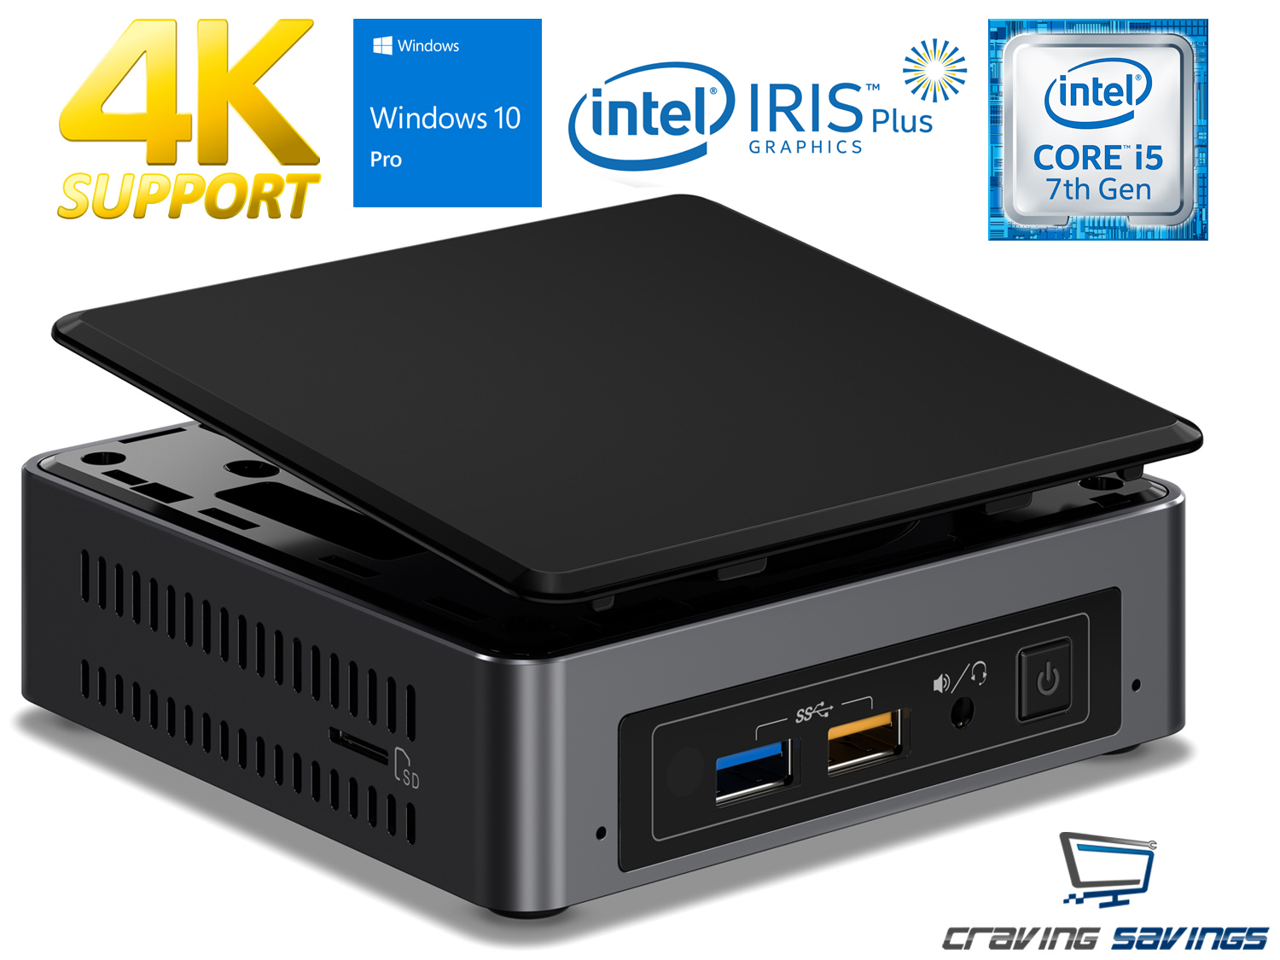 Intel NUC7i5BNK Mini PC, Intel Core i5-7260U 2.2GHz, 16GB DDR4, 256GB NVMe SSD, Wifi, BT 4.2, HDMI, Thunderbolt 3, 4k Support, Dual Monitor Capable, Windows 10 Pro